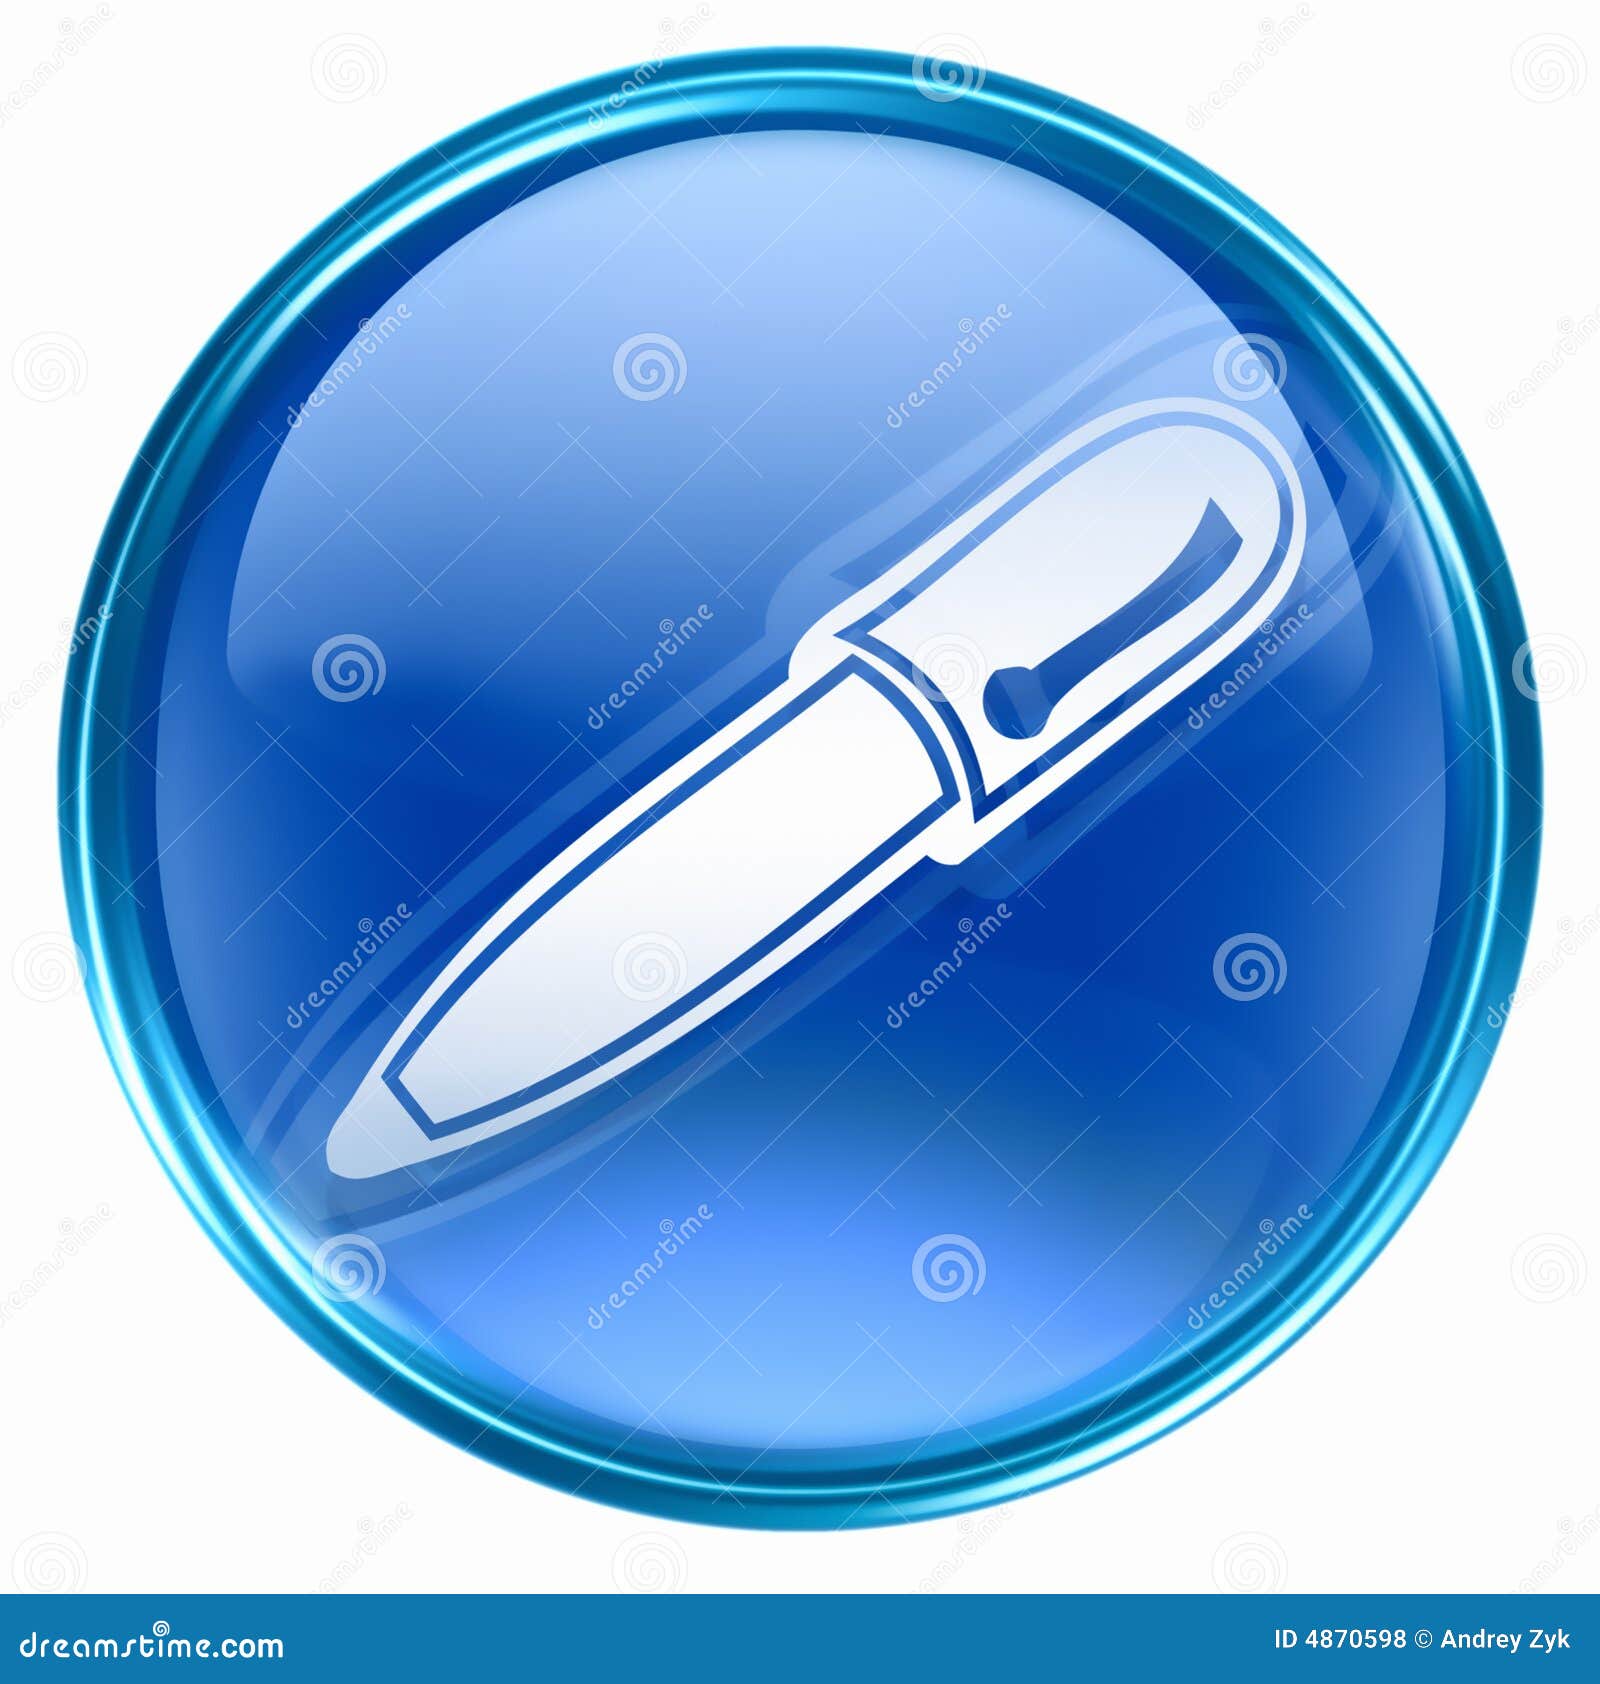 Pen icon blue, isolated on white background.